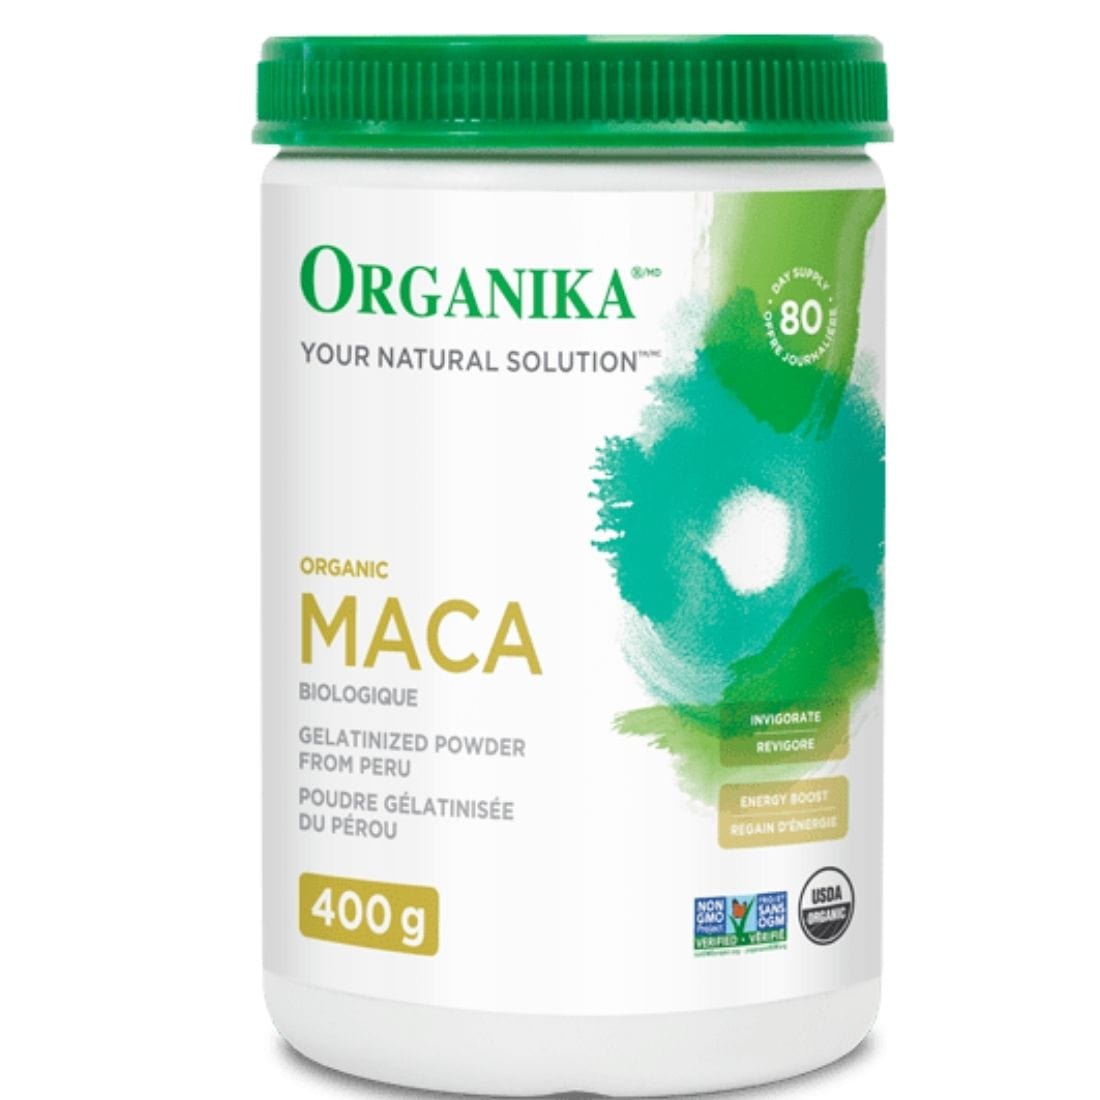 Organika Organic Maca Powder (100% Natural)